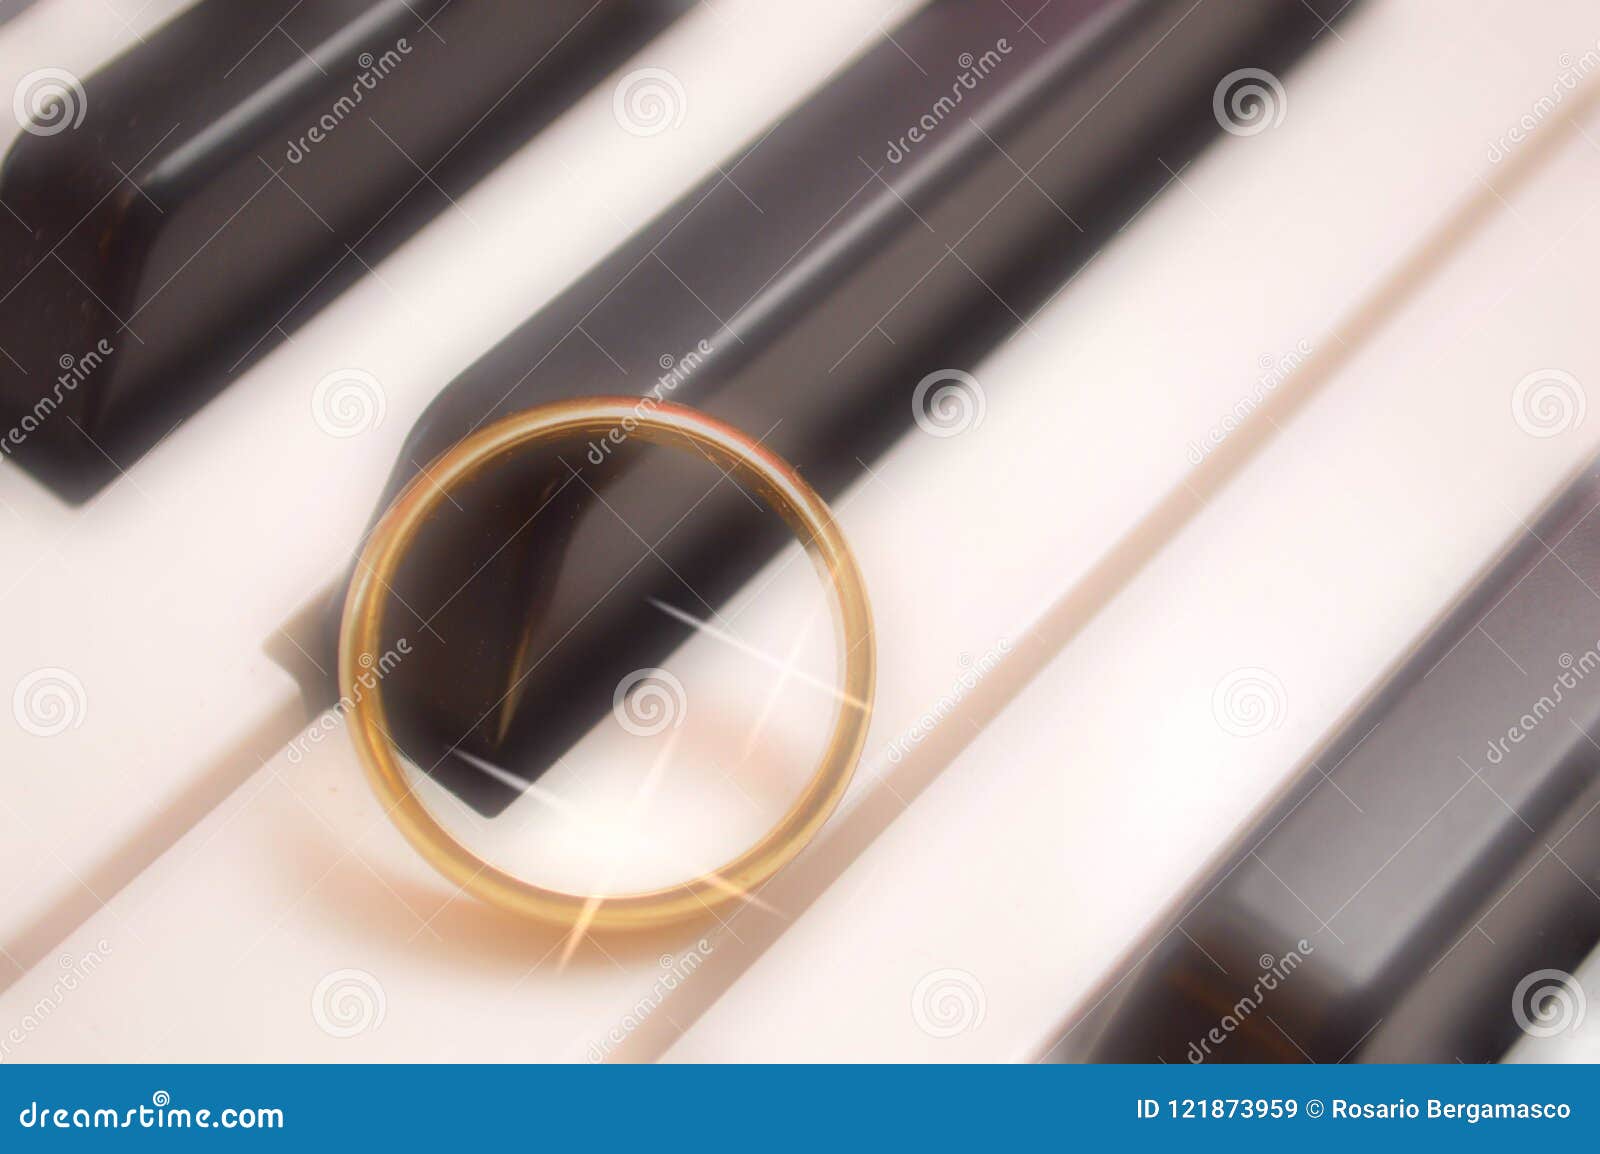 Wedding Ring on Piano Keys Instrumental Music Stock Image Image of